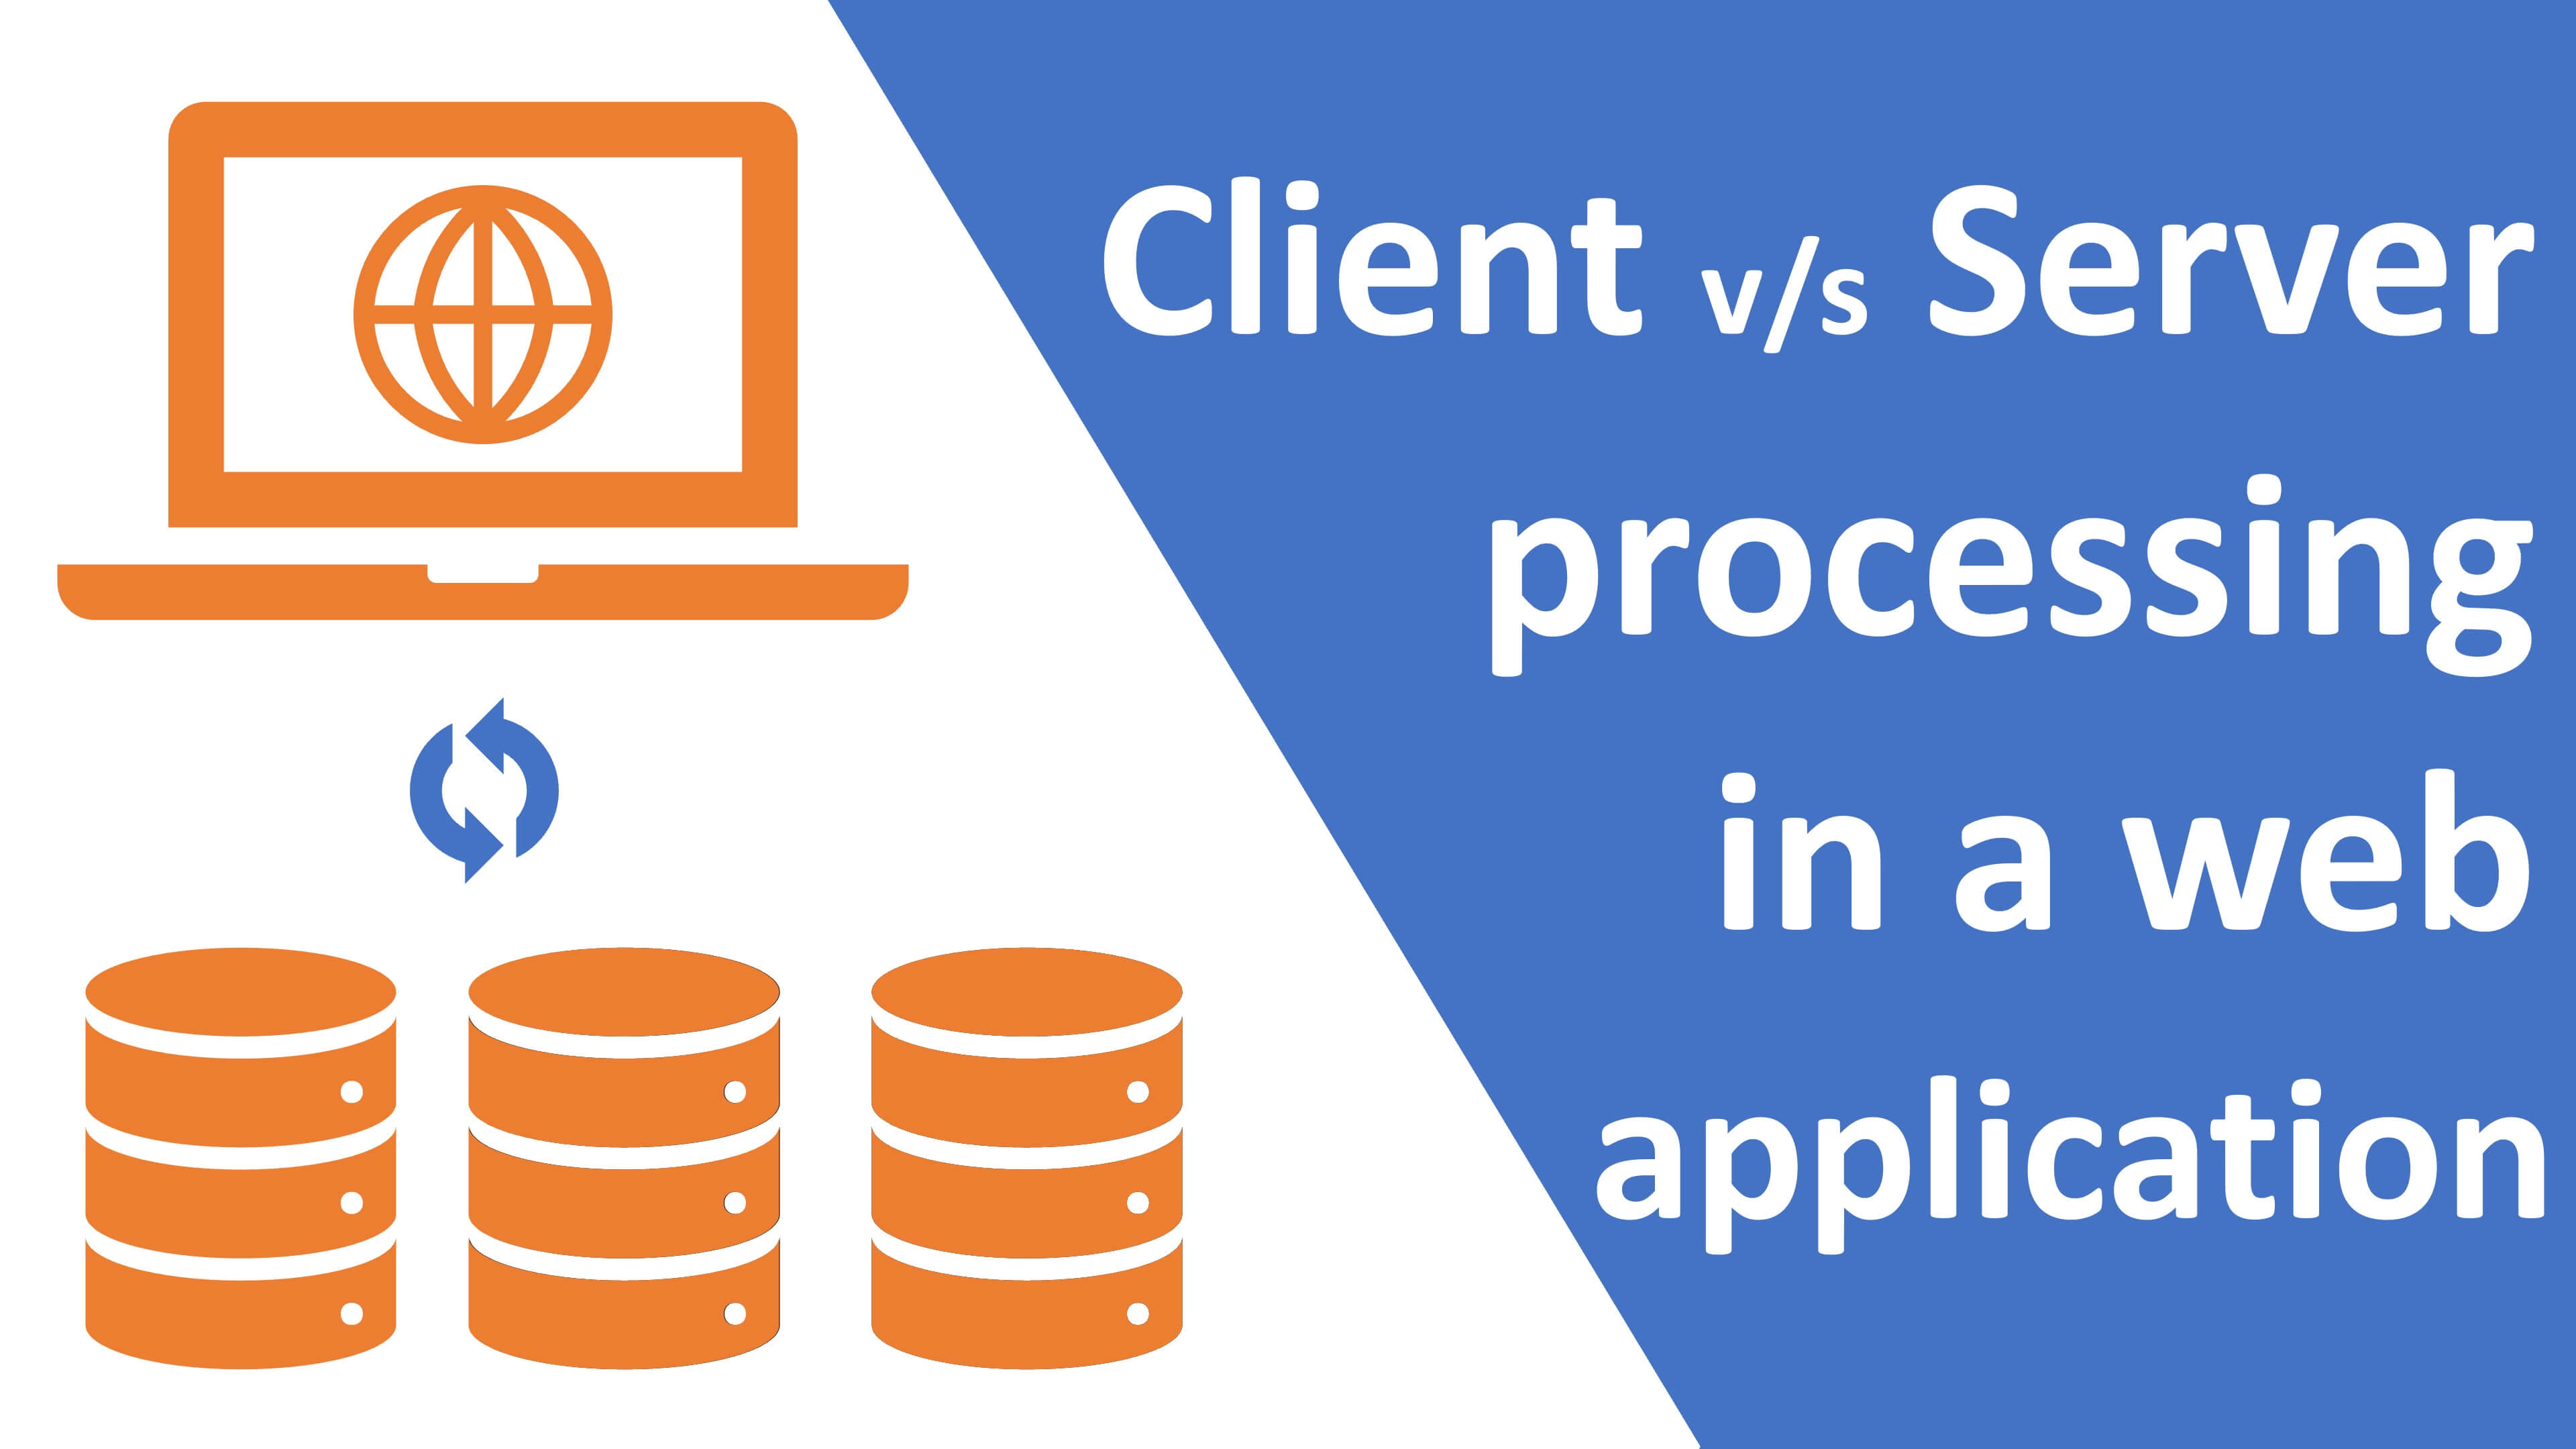 web application client vs server side processing